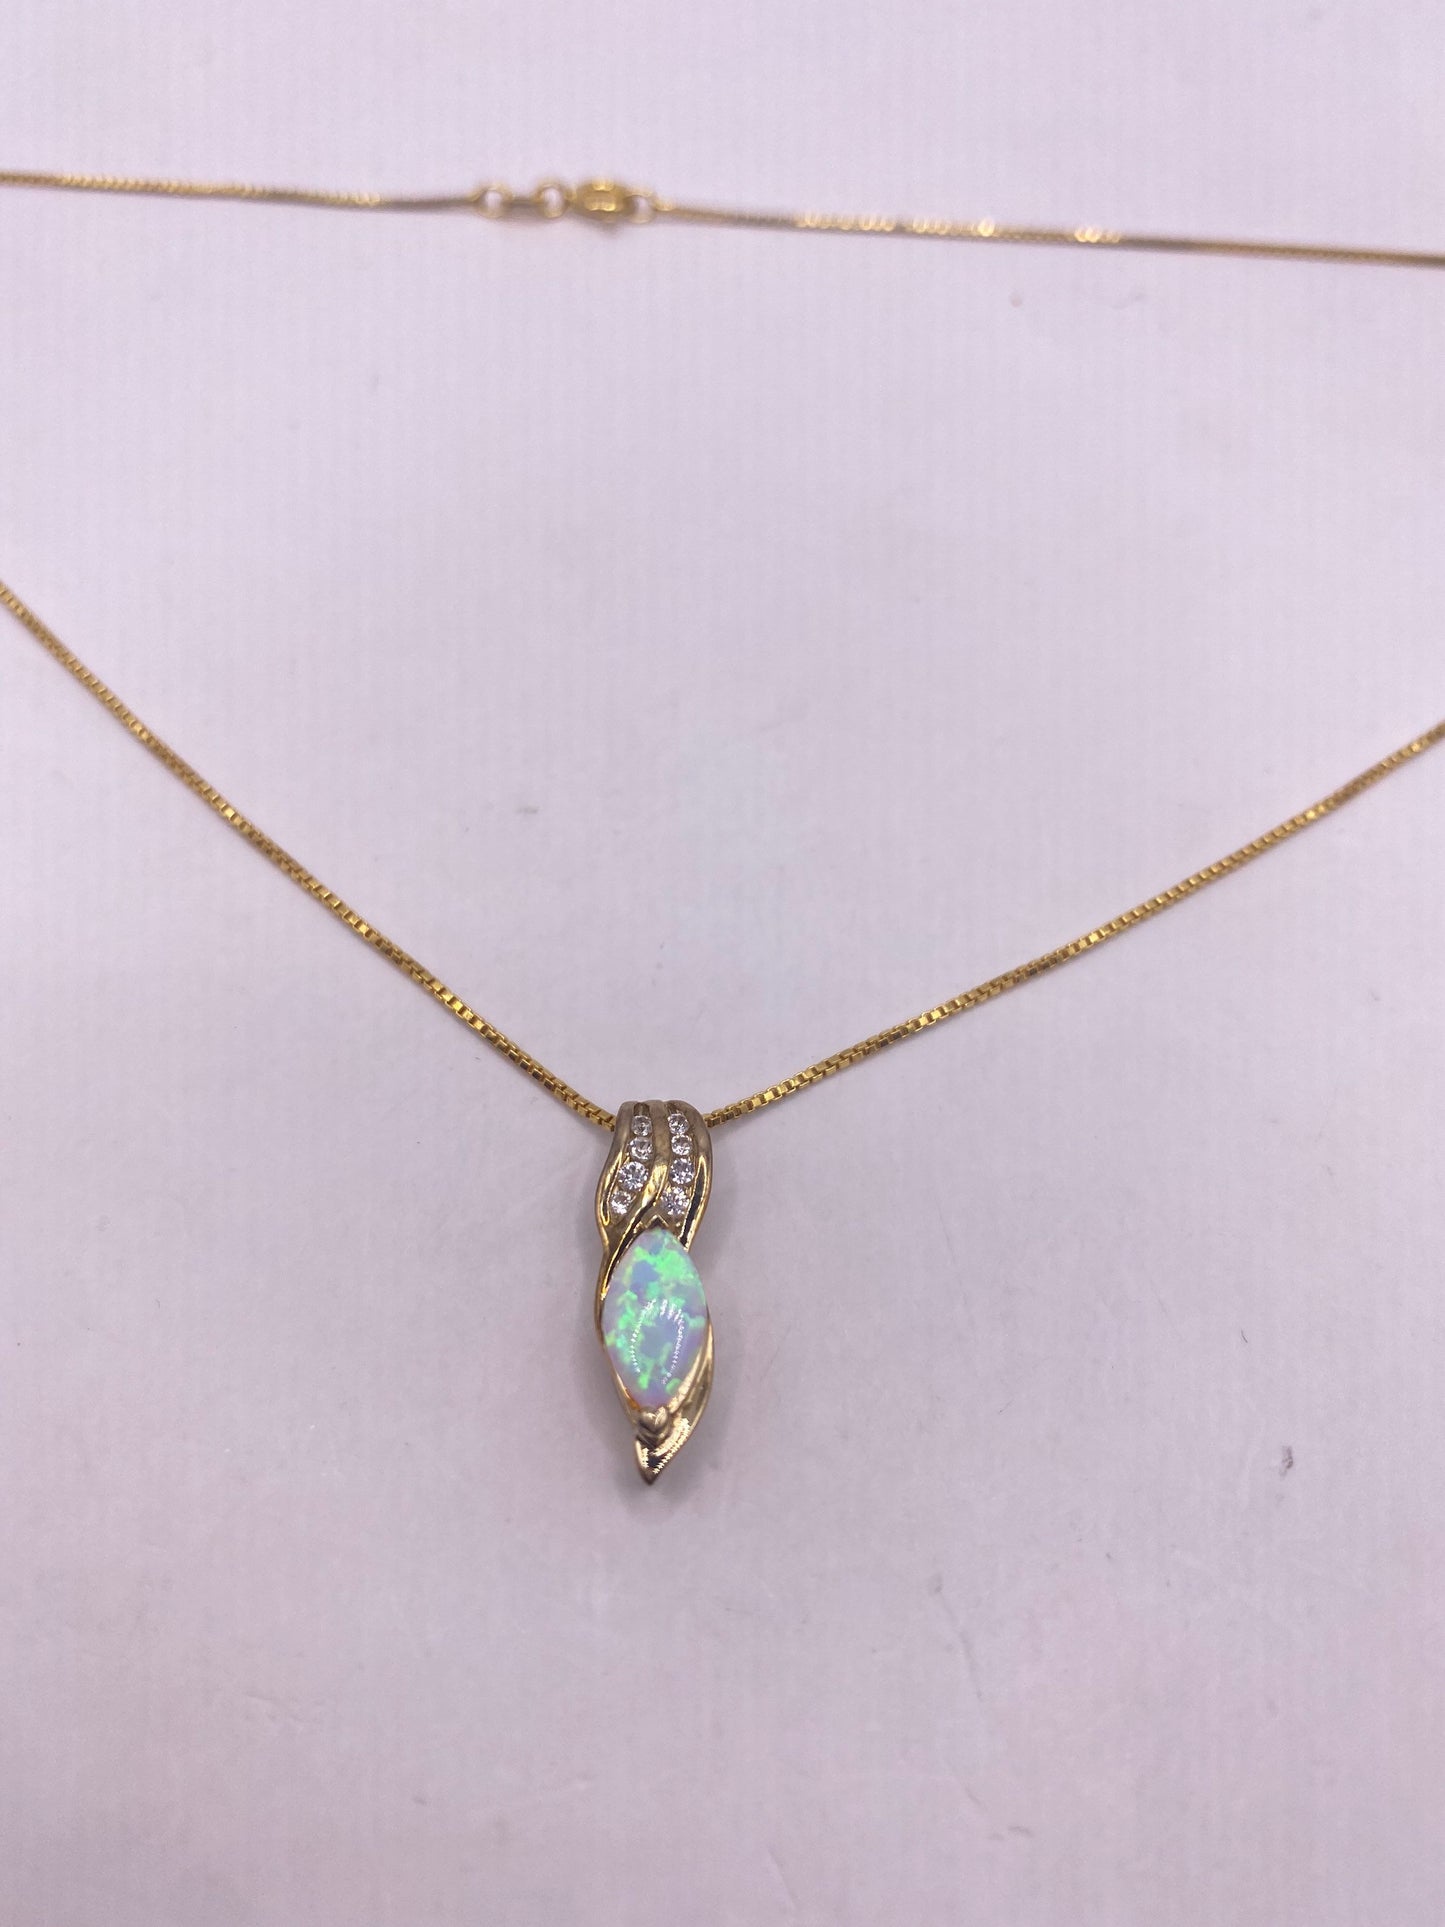 Vintage Fire Opal Choker Golden 925 Sterling Silver Pendant 16 inch Necklace